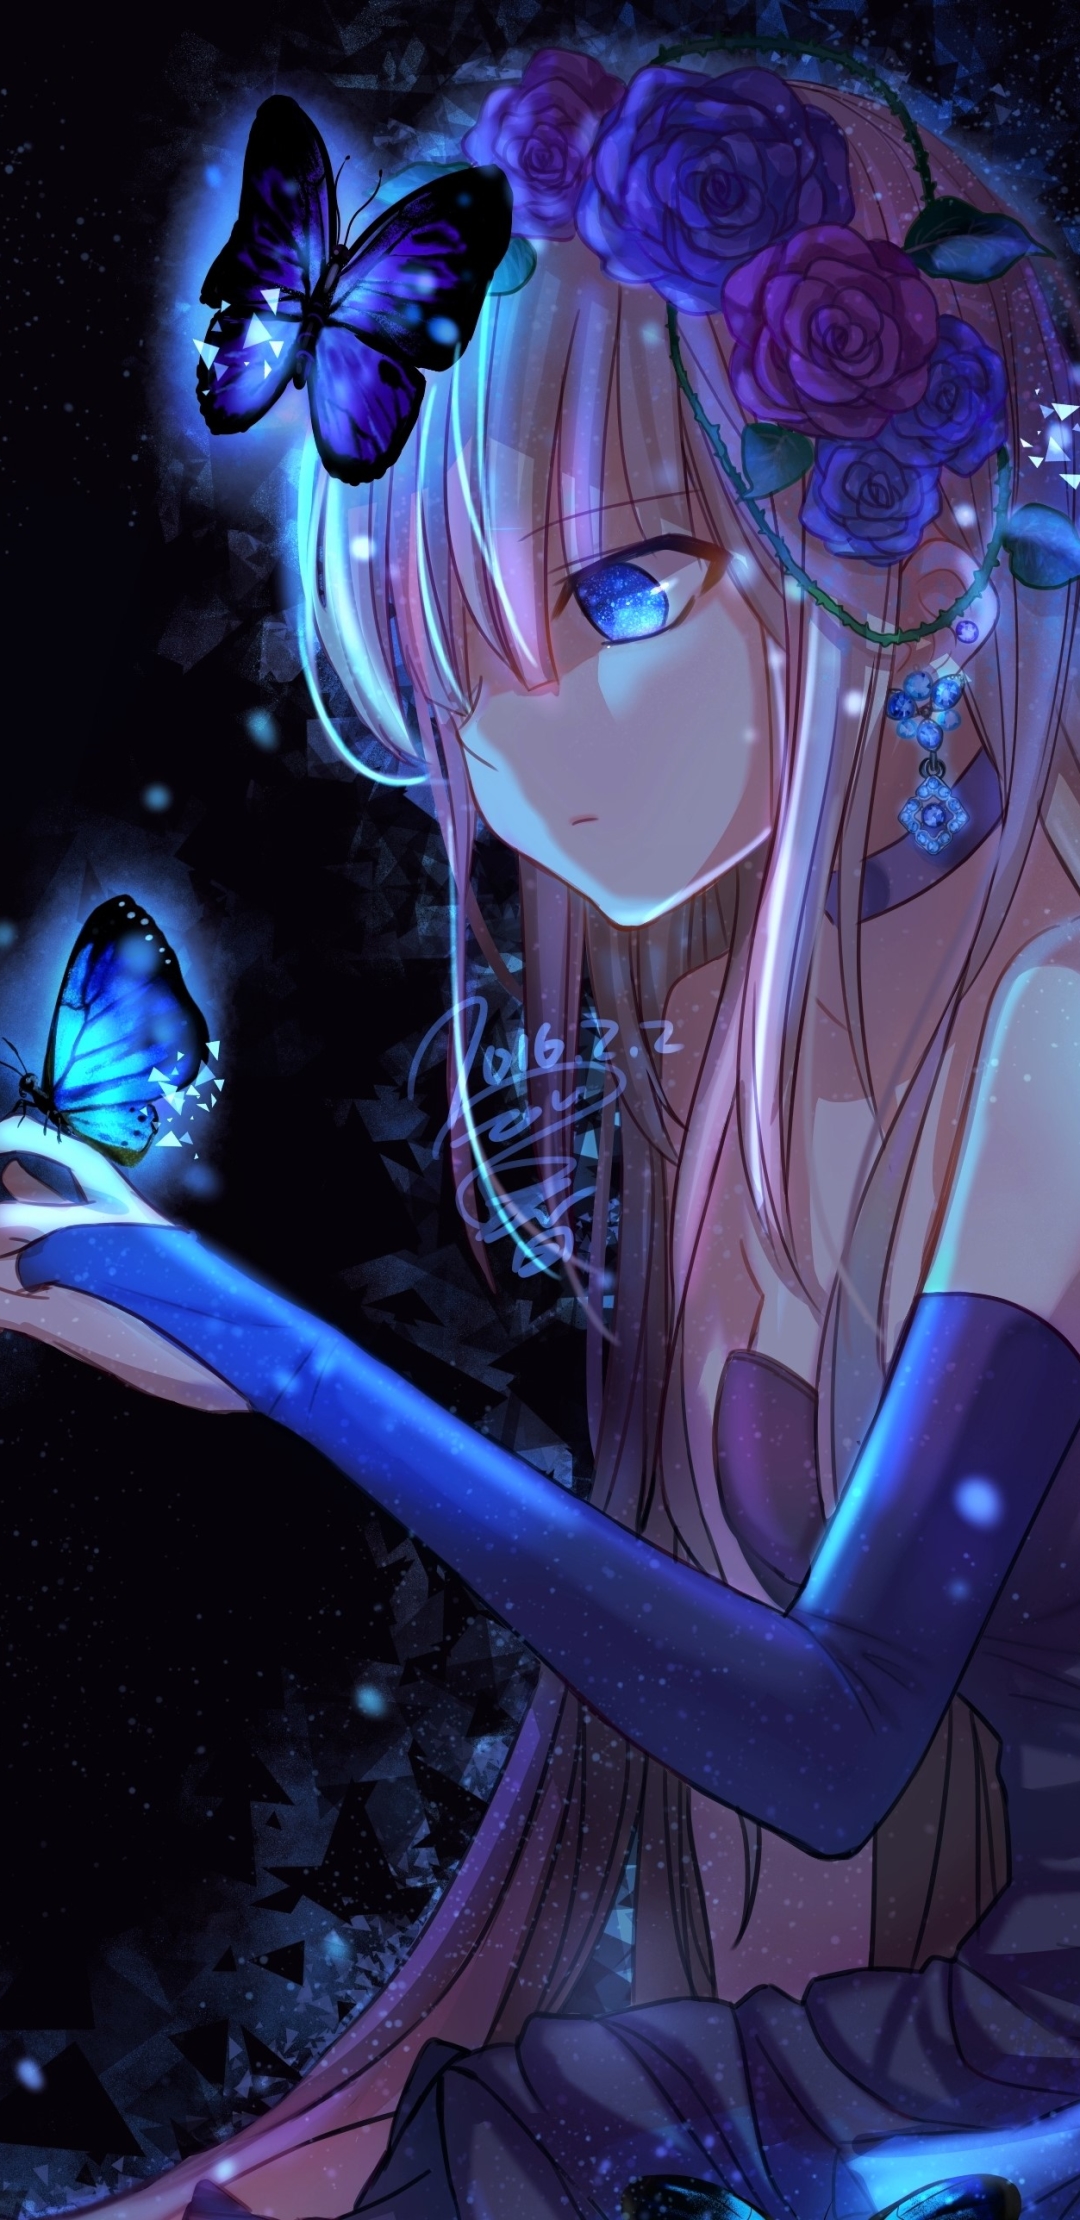 Blue Hair Girl Butterflies Anime HD Anime Girl Wallpapers